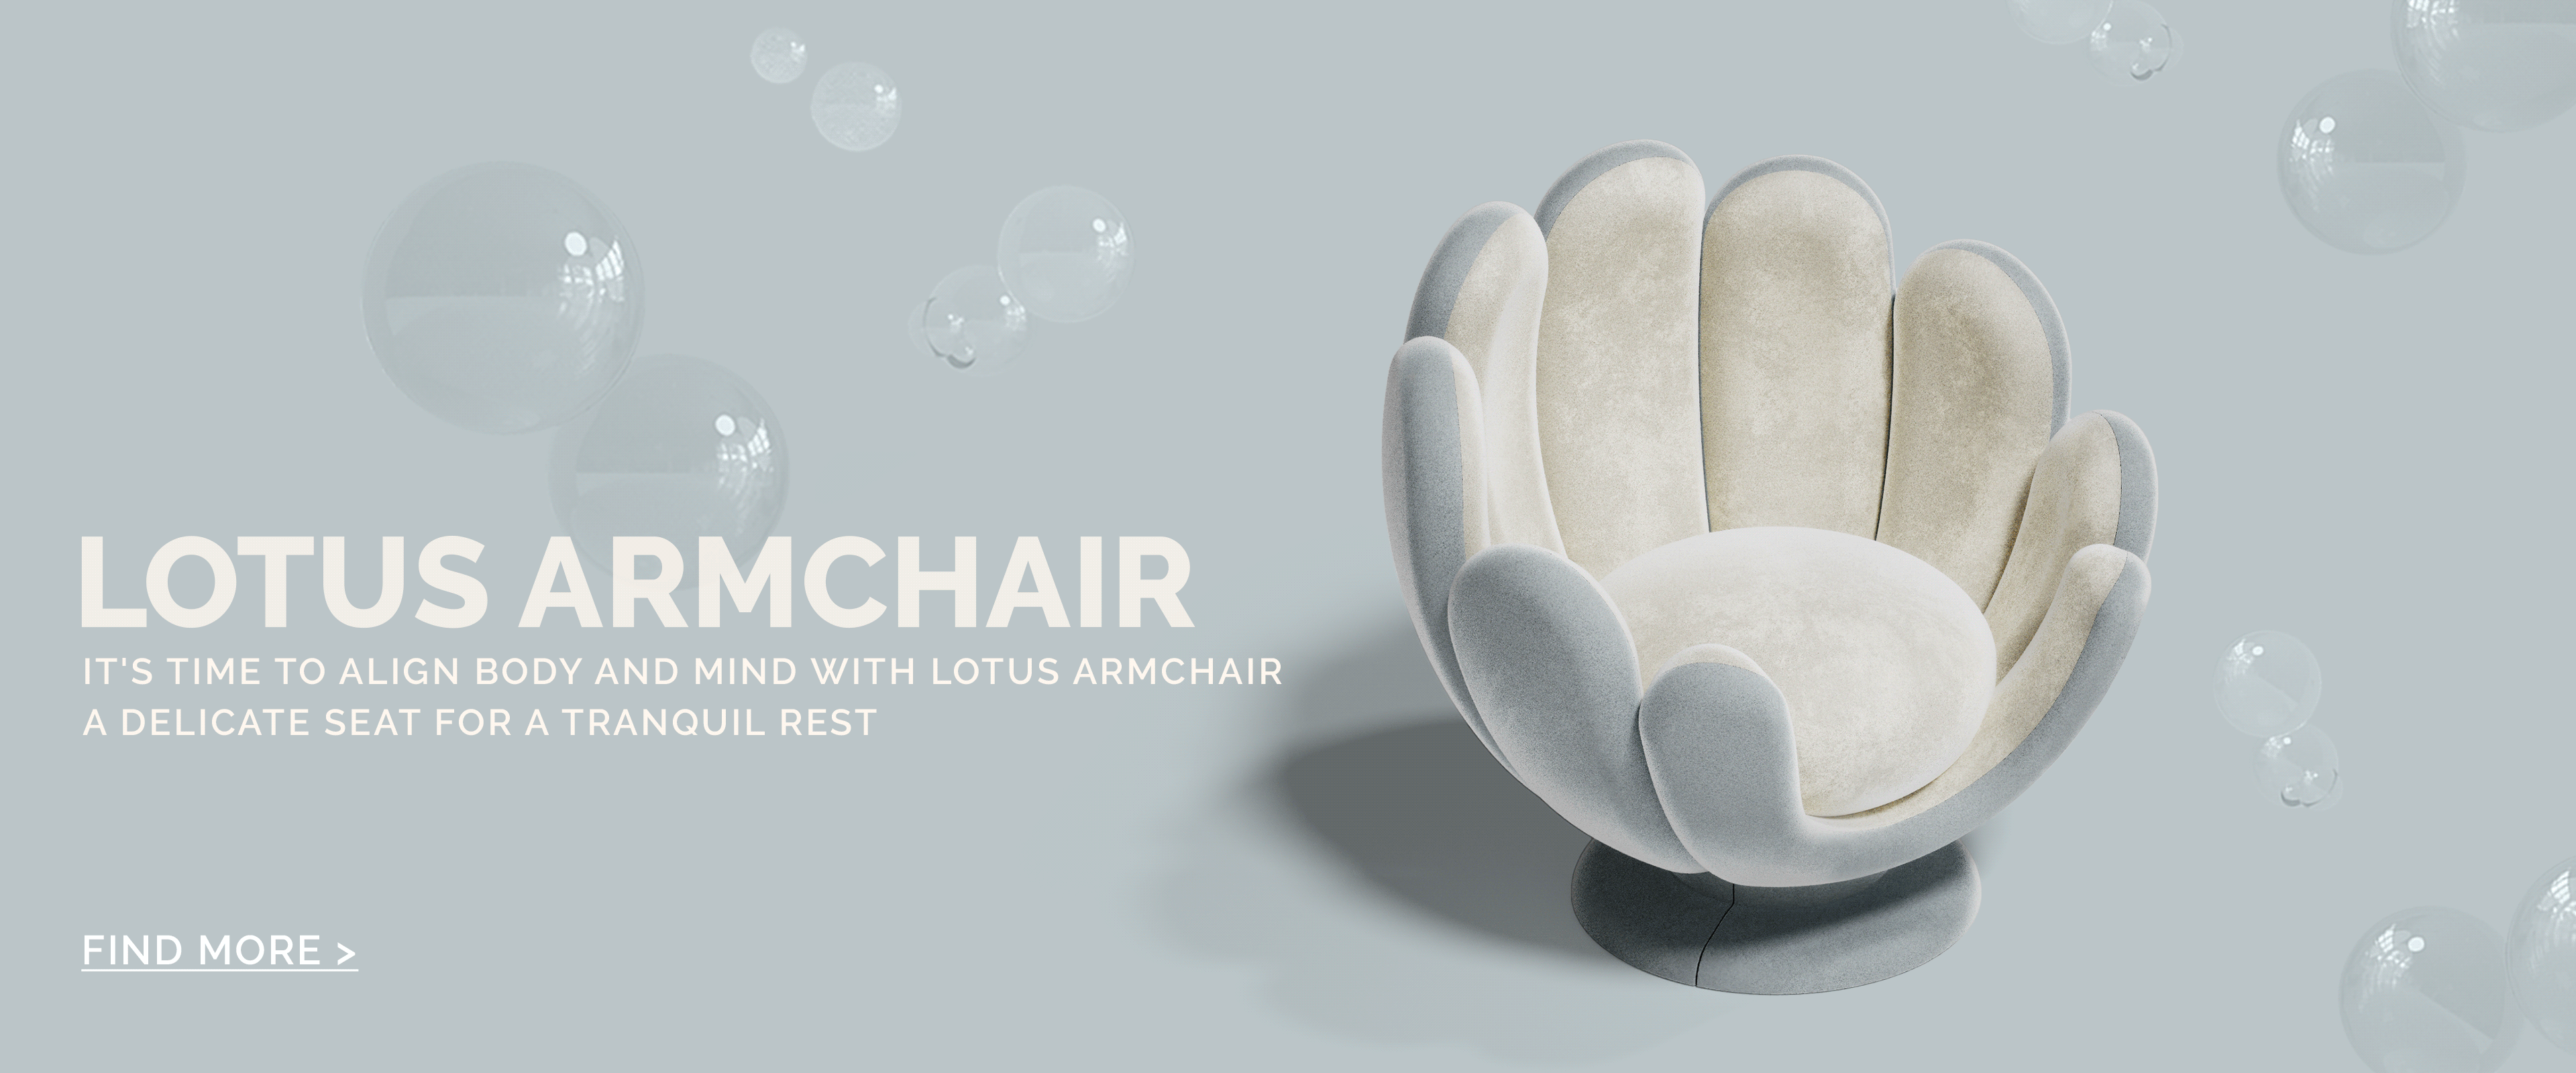 lotus armchair circu magical furniture